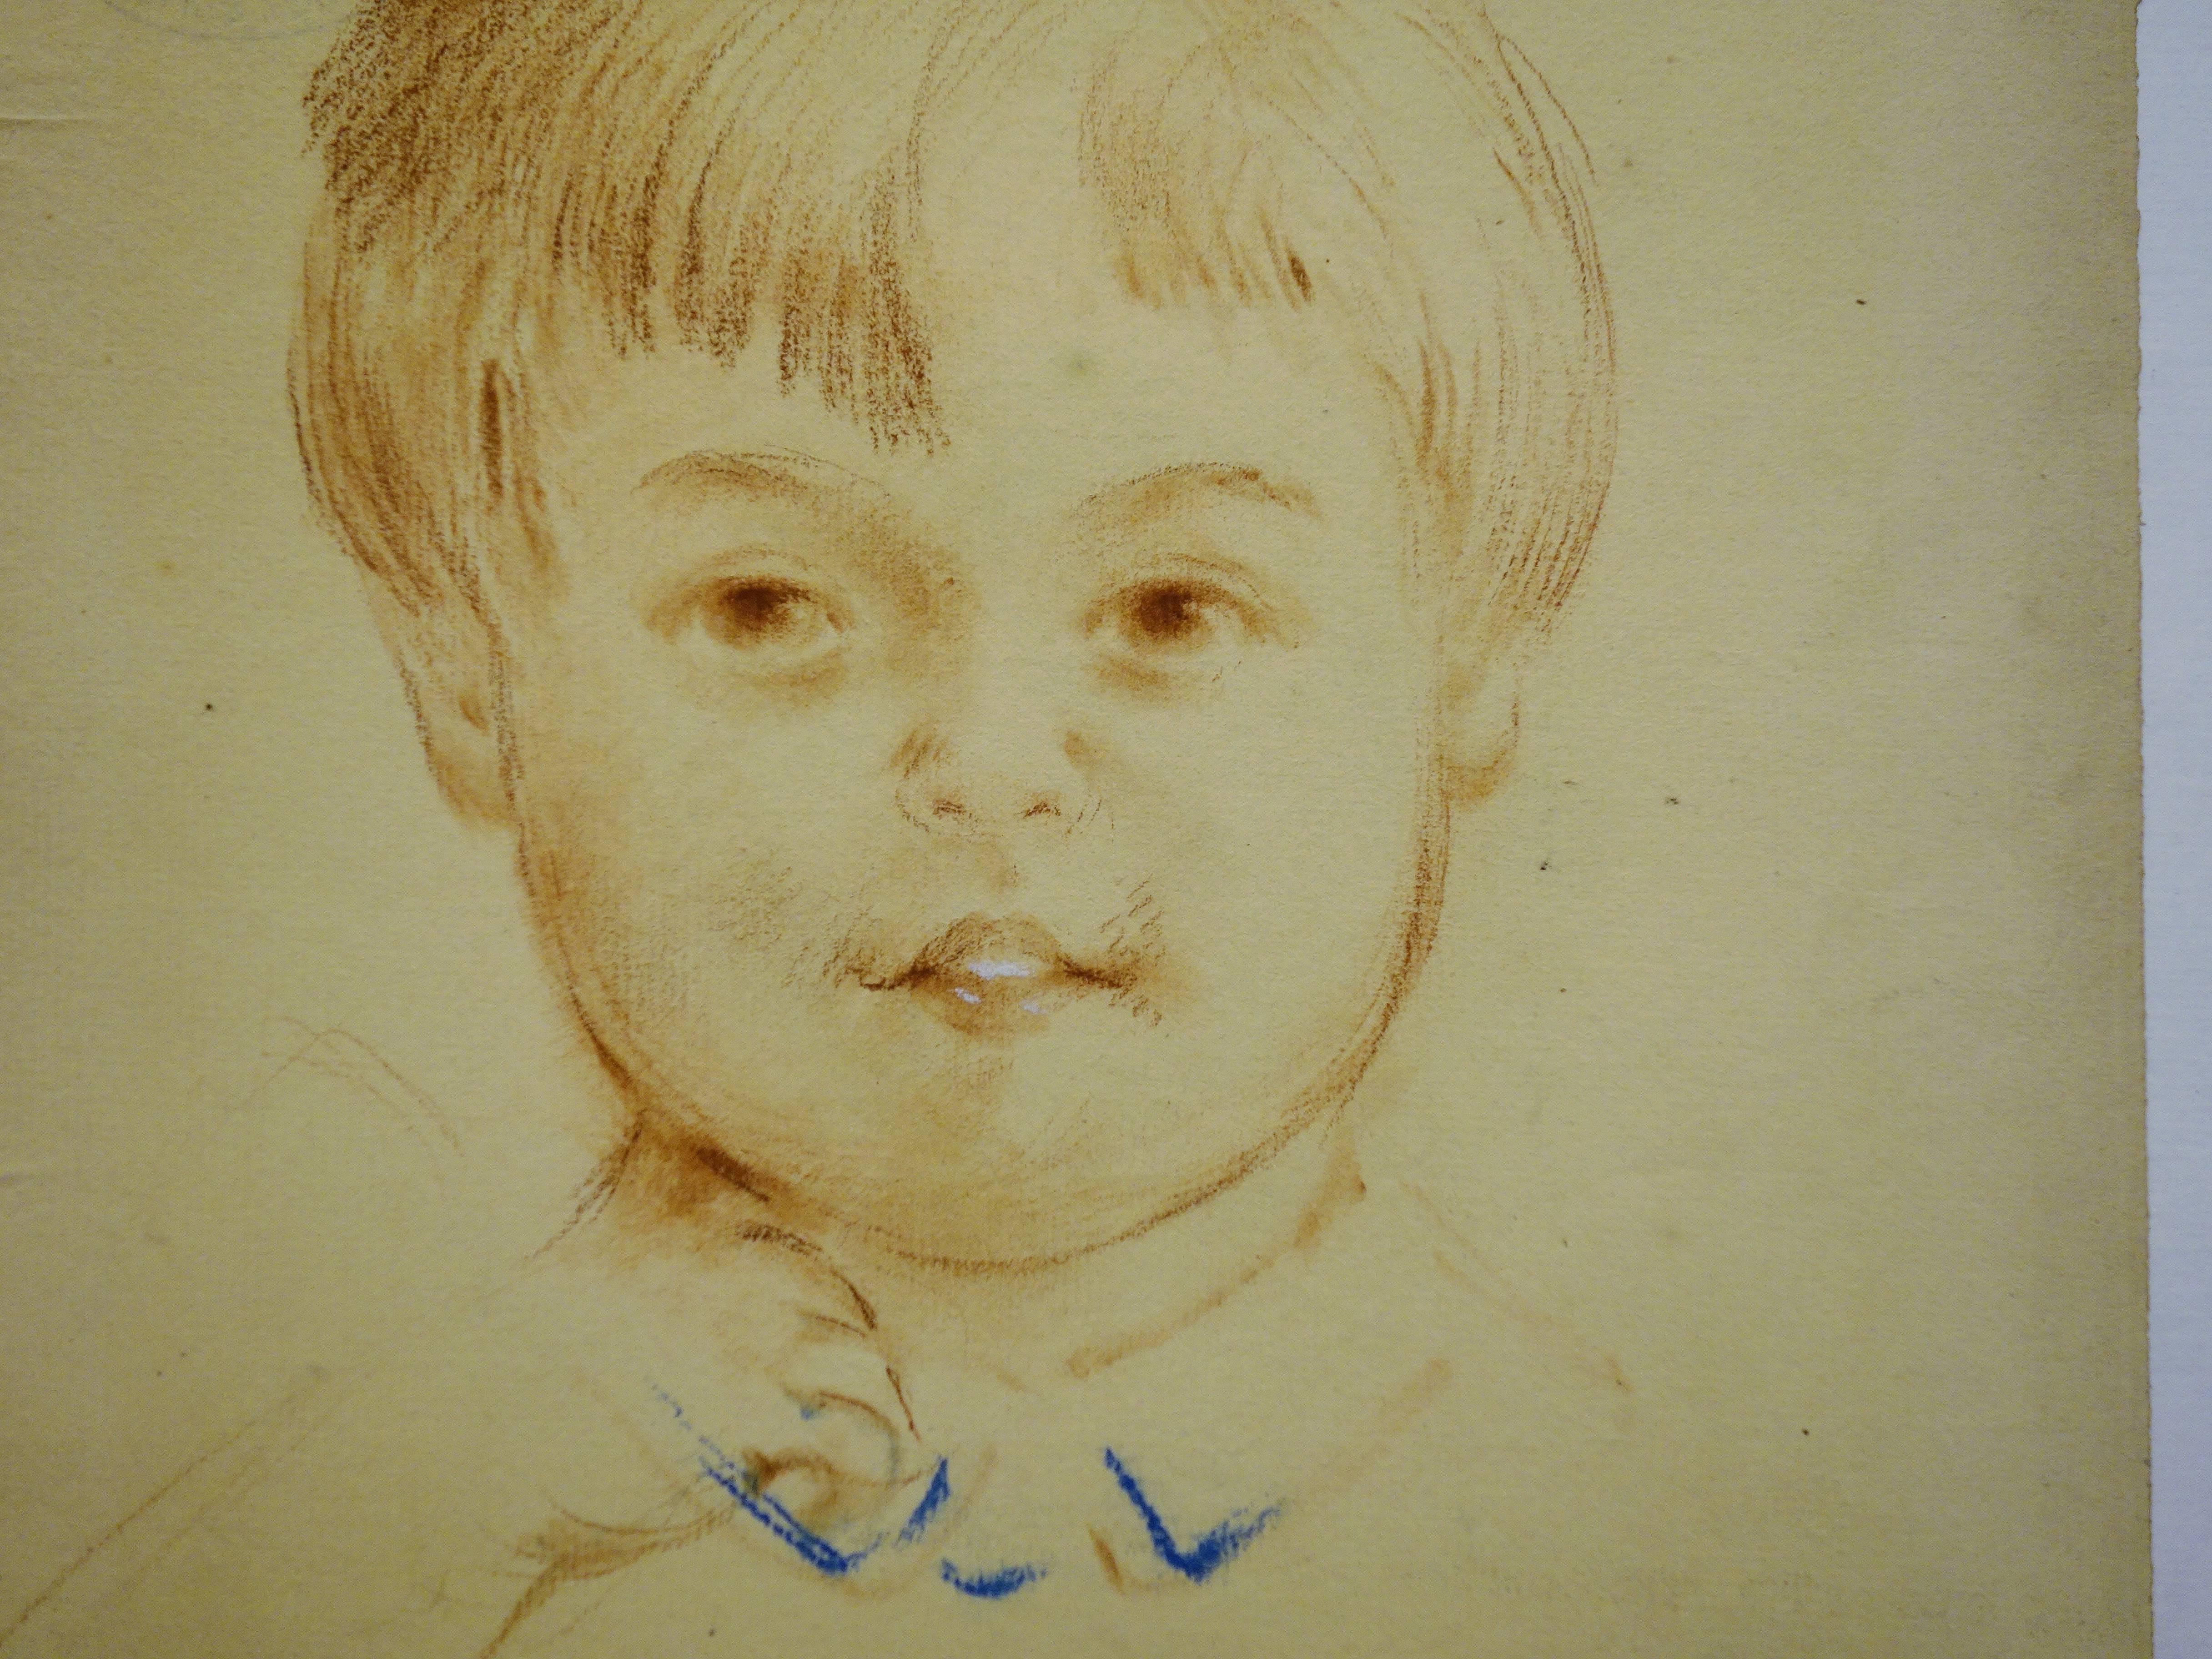 Jeune garçon qui sourit - Dessin original au fusain  - Marron Figurative Art par Gustave Poetzsch